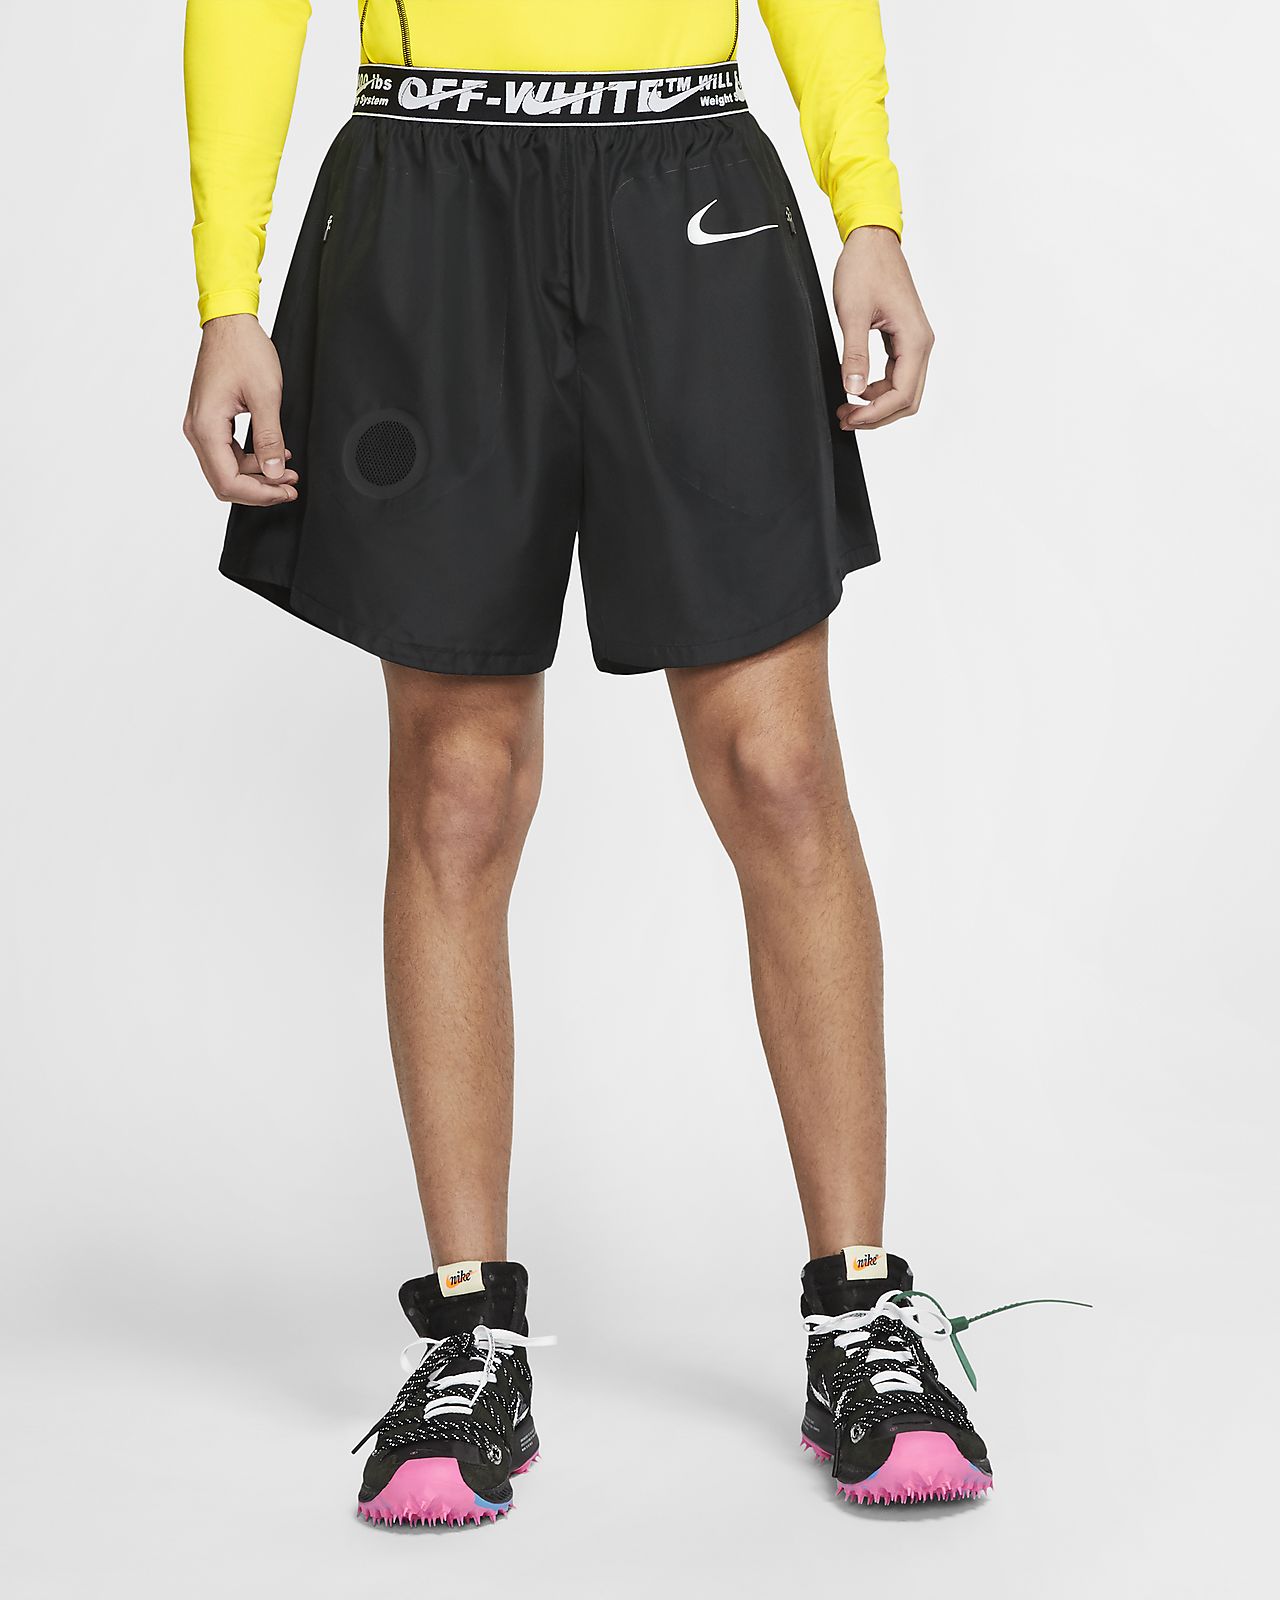 Continuamente flaco Zumbido Nike Off White Shorts, Buy Now, Hotsell, 51% OFF, sportsregras.com